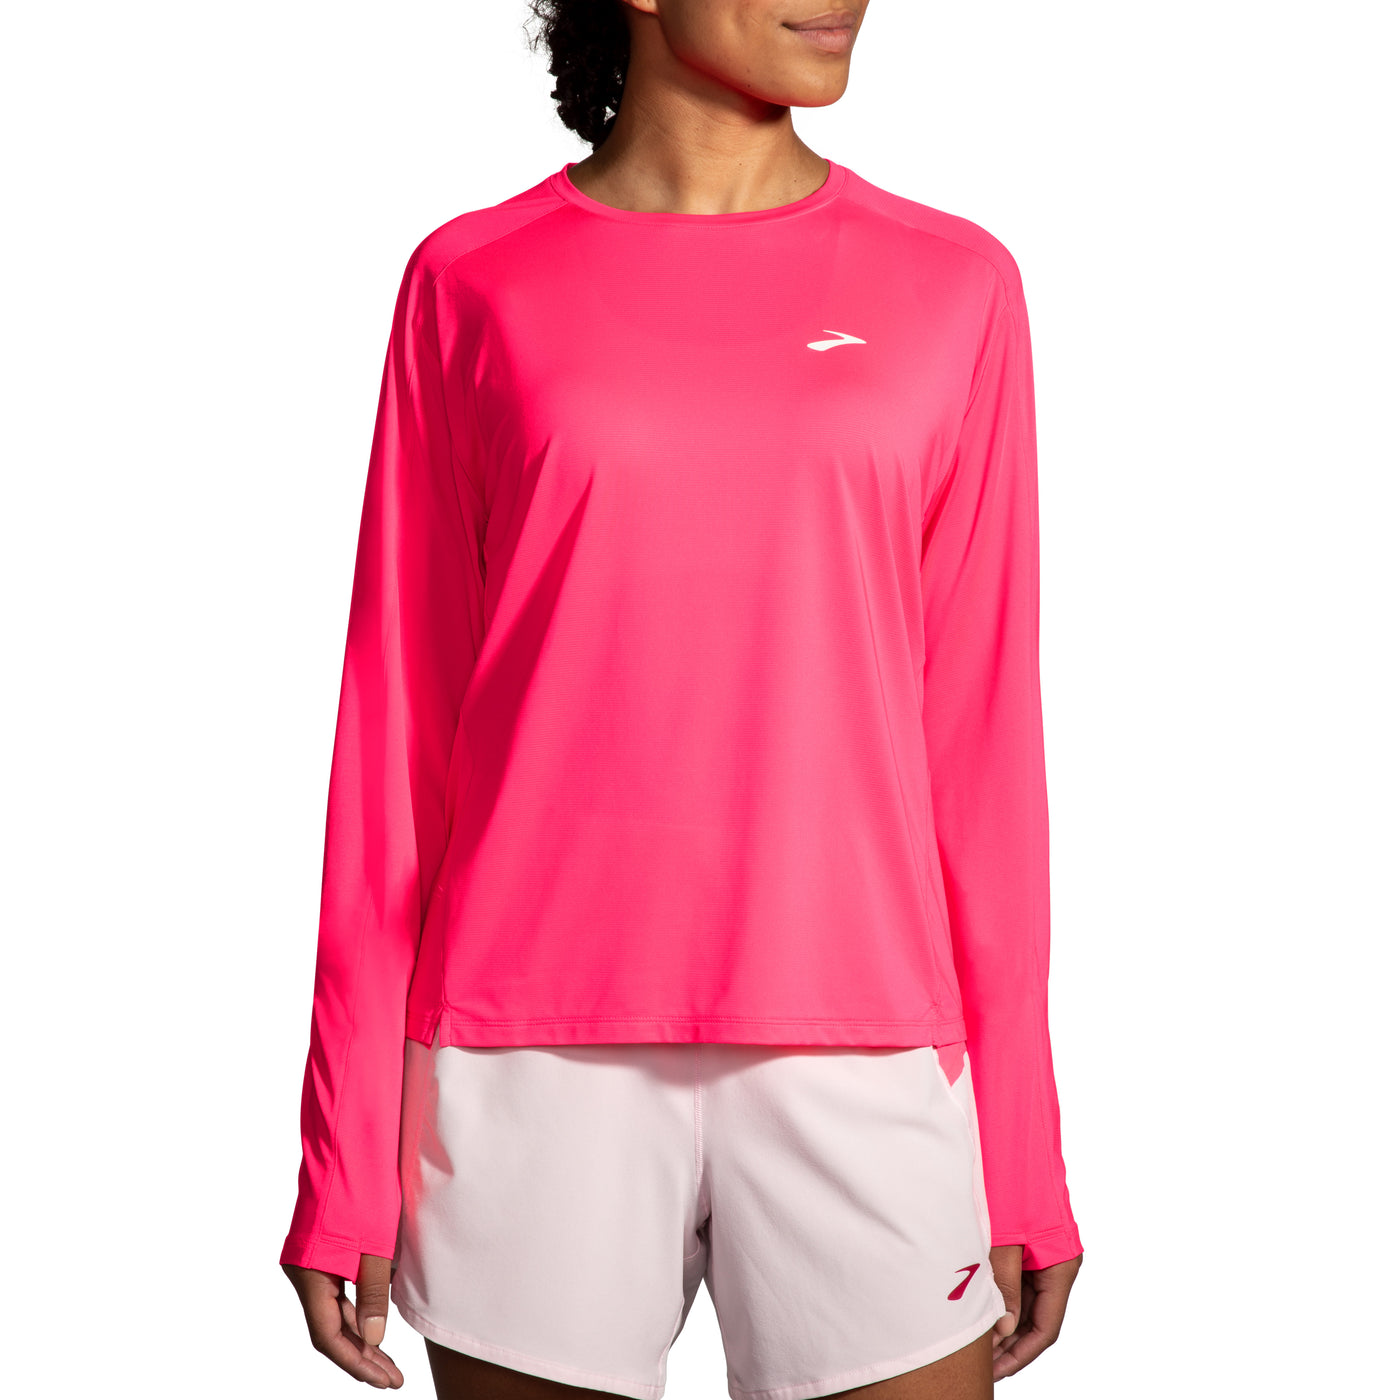 Brooks Womens Sprint Free Long Sleeve - Hyper Pink